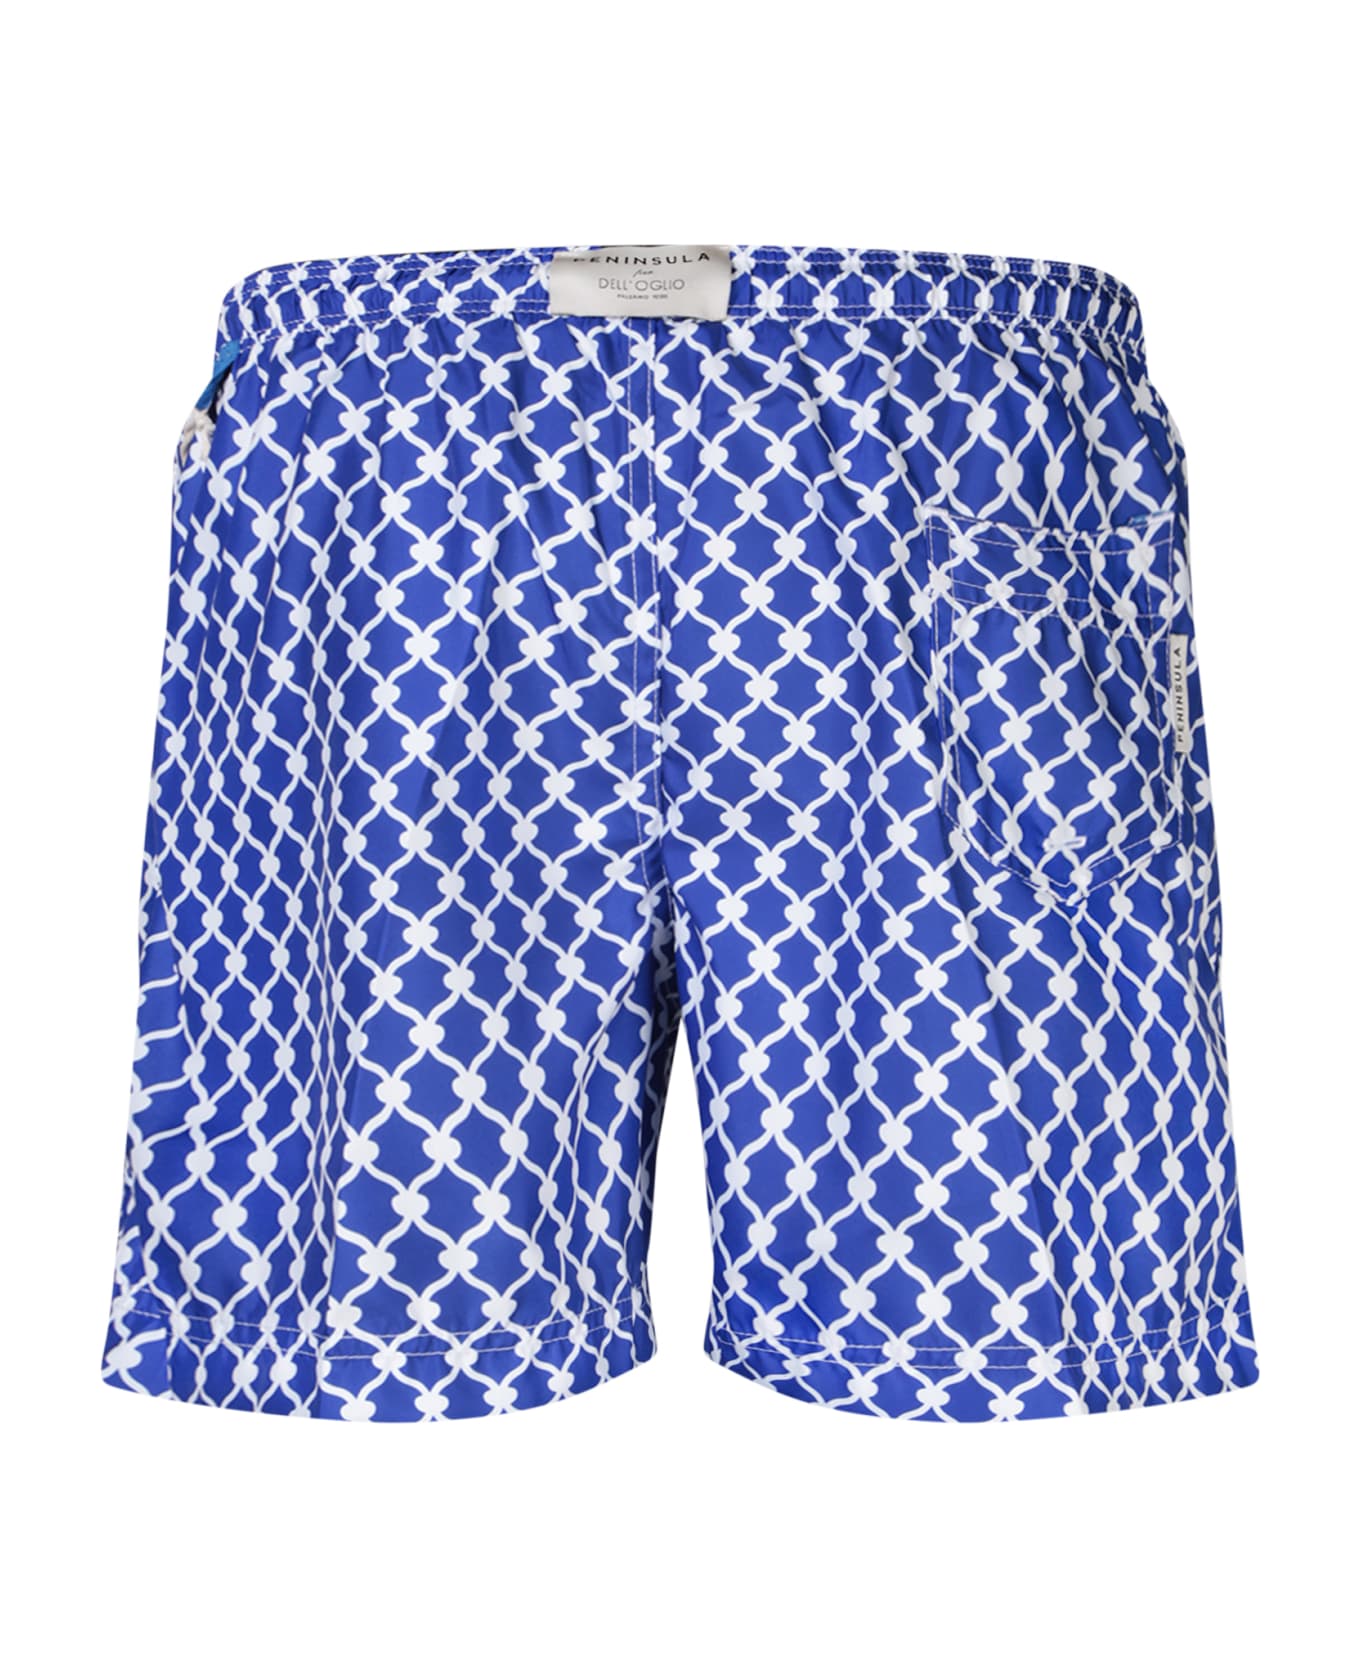 Peninsula Swimwear Patterned Blue/white Boxer Swim Shorts - White